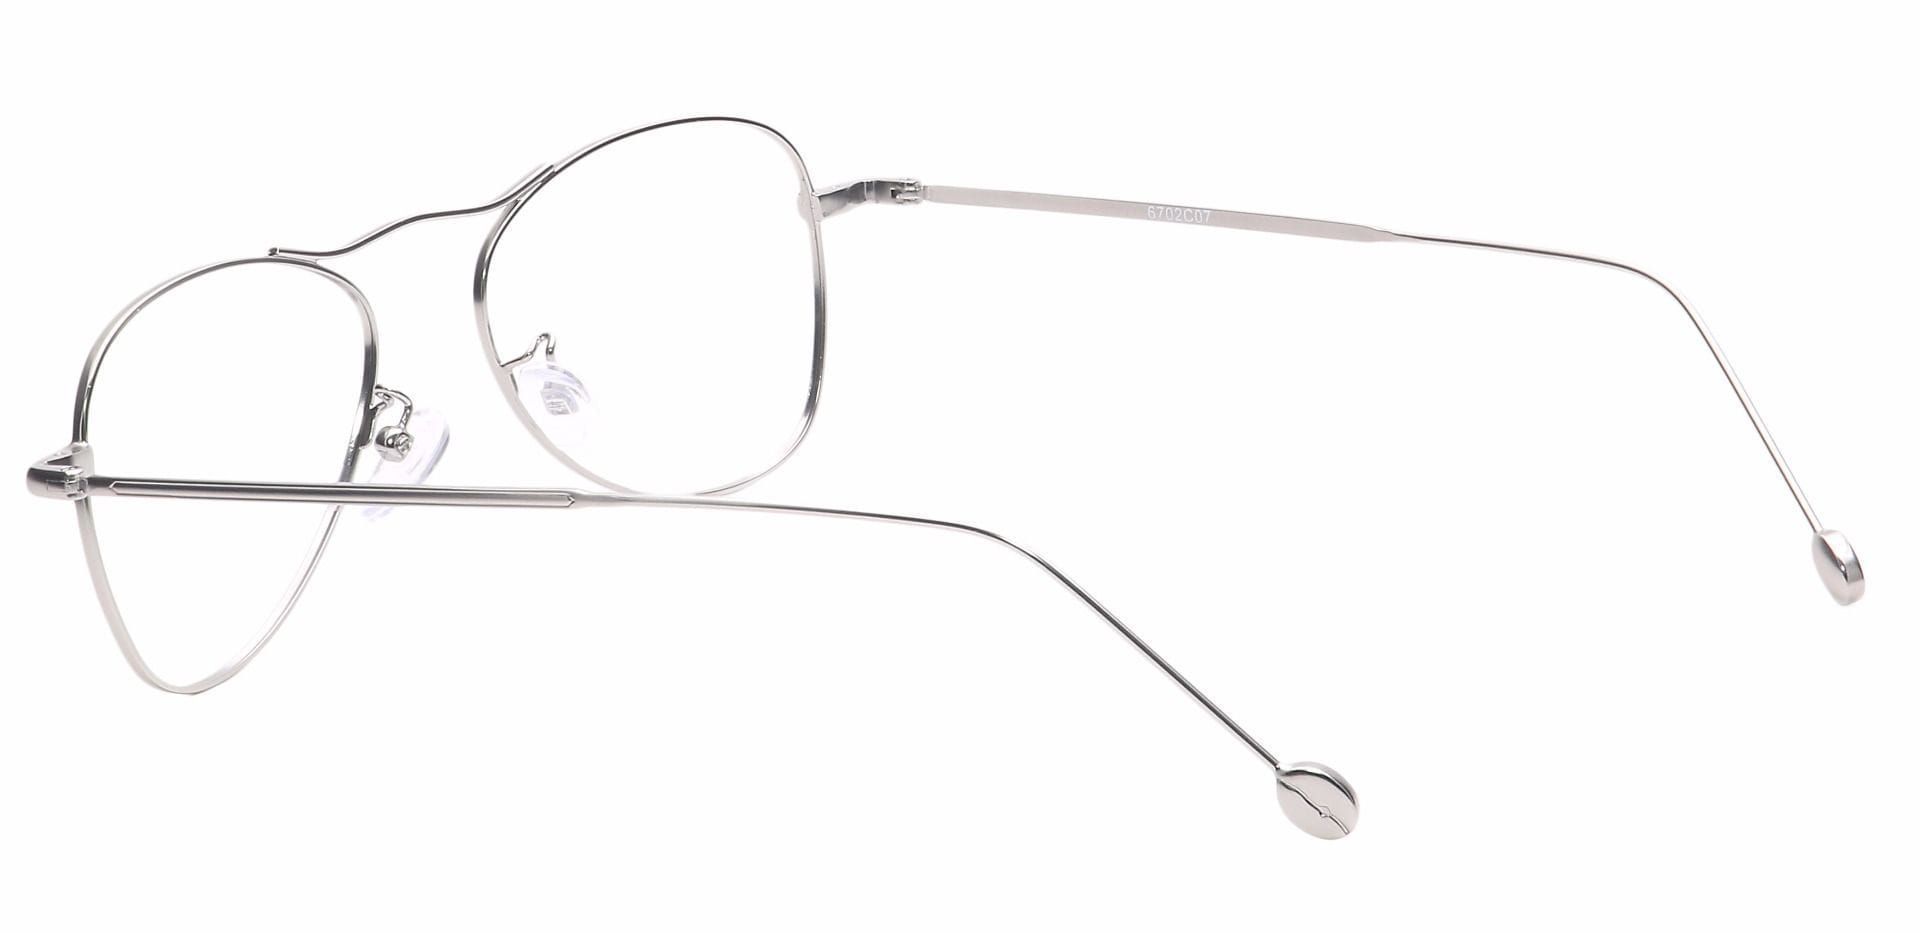 Brio Aviator Eyeglasses Frame - Silver